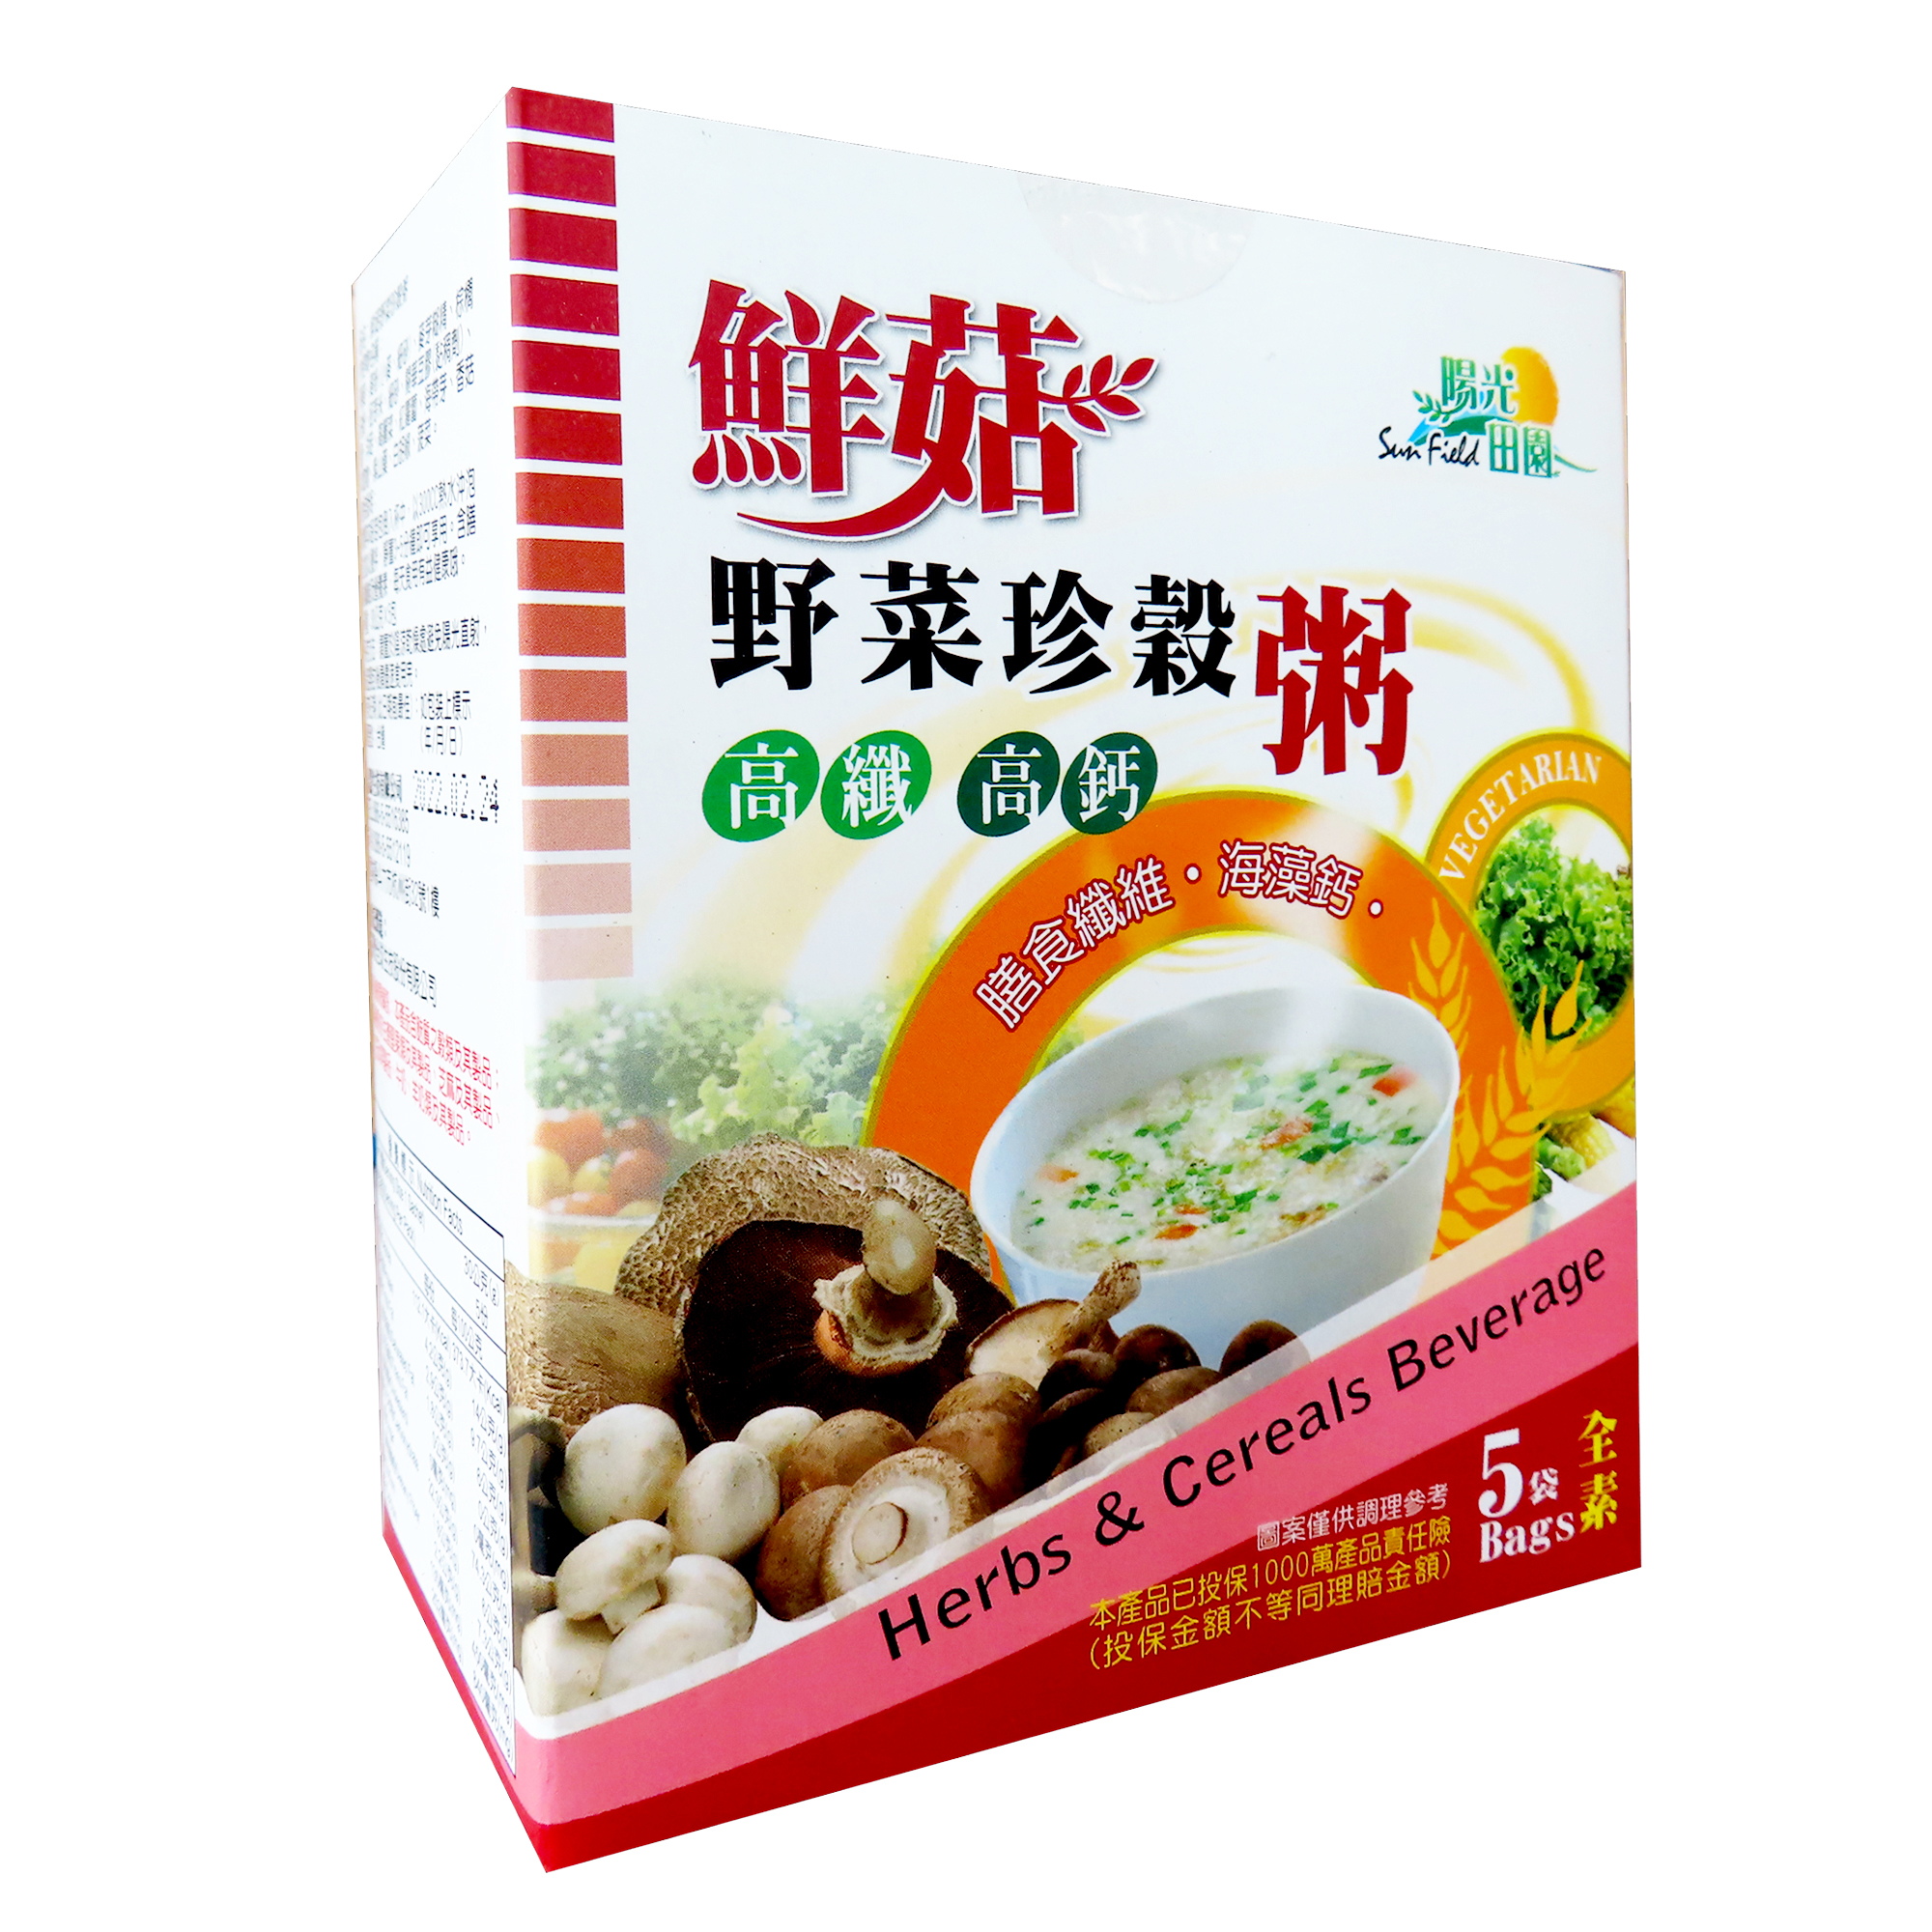 Image Herbs & Cereals Beverage 富懋 - 鲜菇野菜珍榖粥 (5bags) 150grams